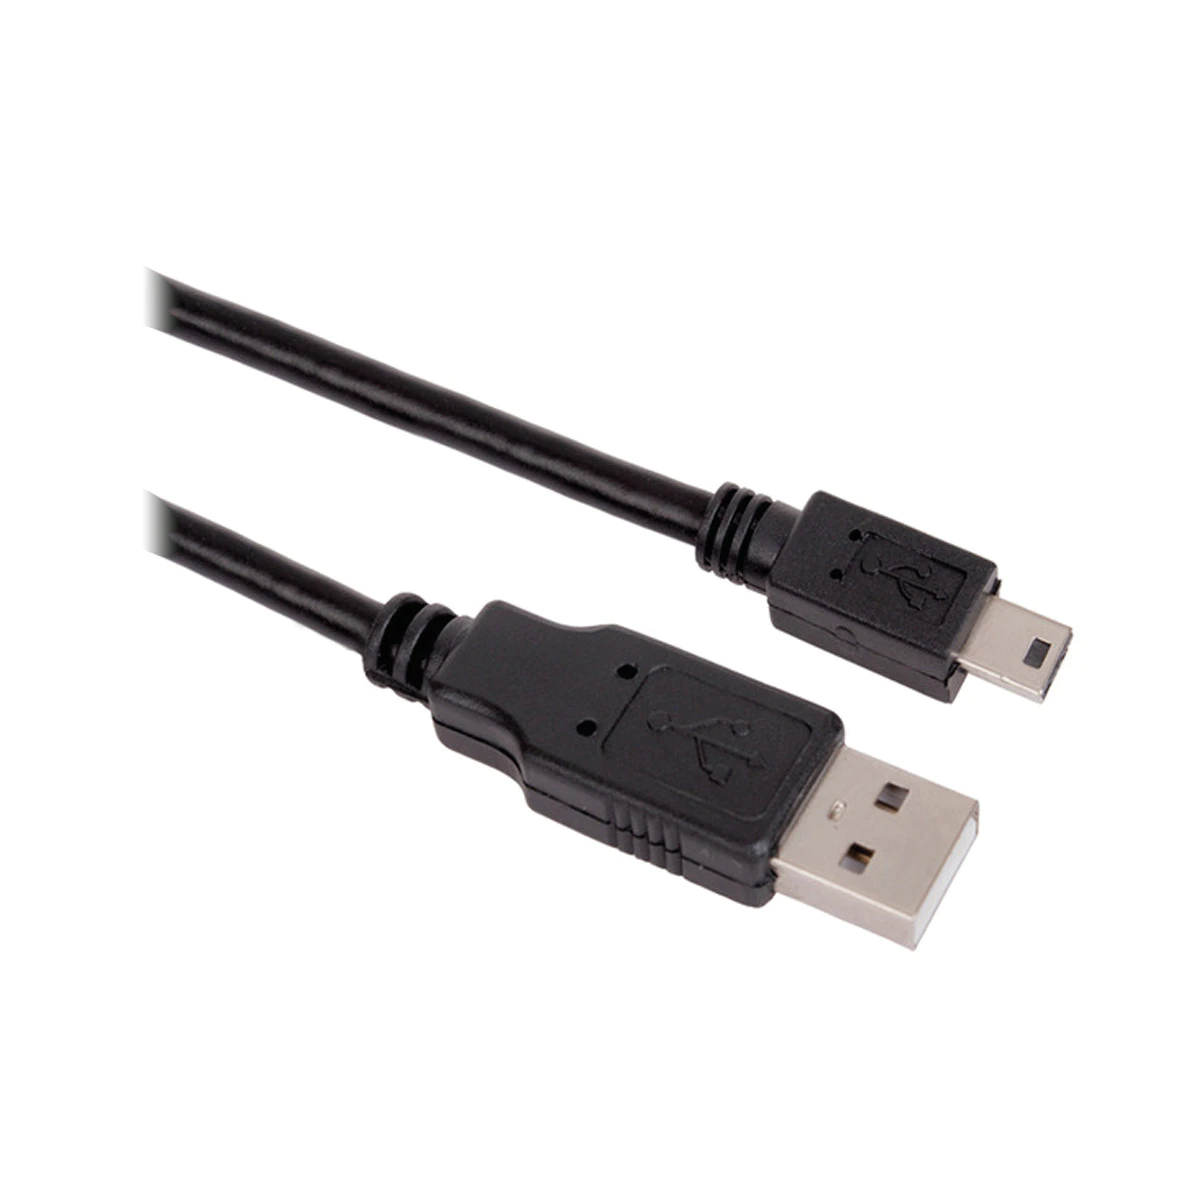 Cable de datos y carga Inves CU271 de USB a Micro USB de 0,8 metros